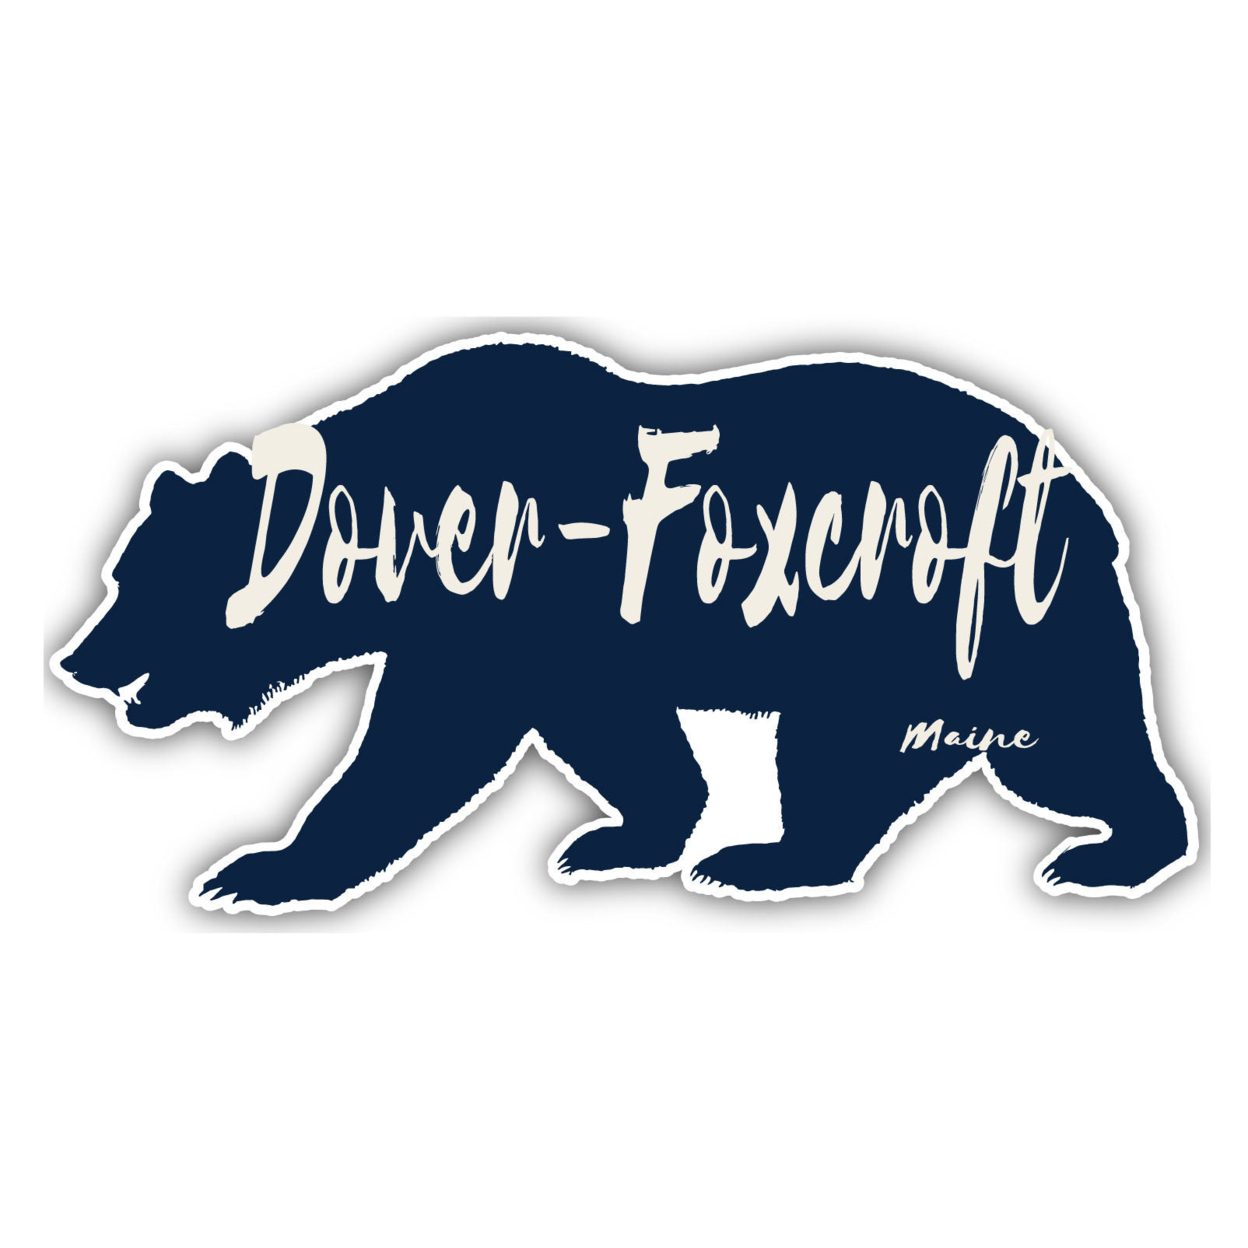 Dover-Foxcroft Maine Souvenir Decorative Stickers (Choose Theme And Size) - Single Unit, 10-Inch, Bear